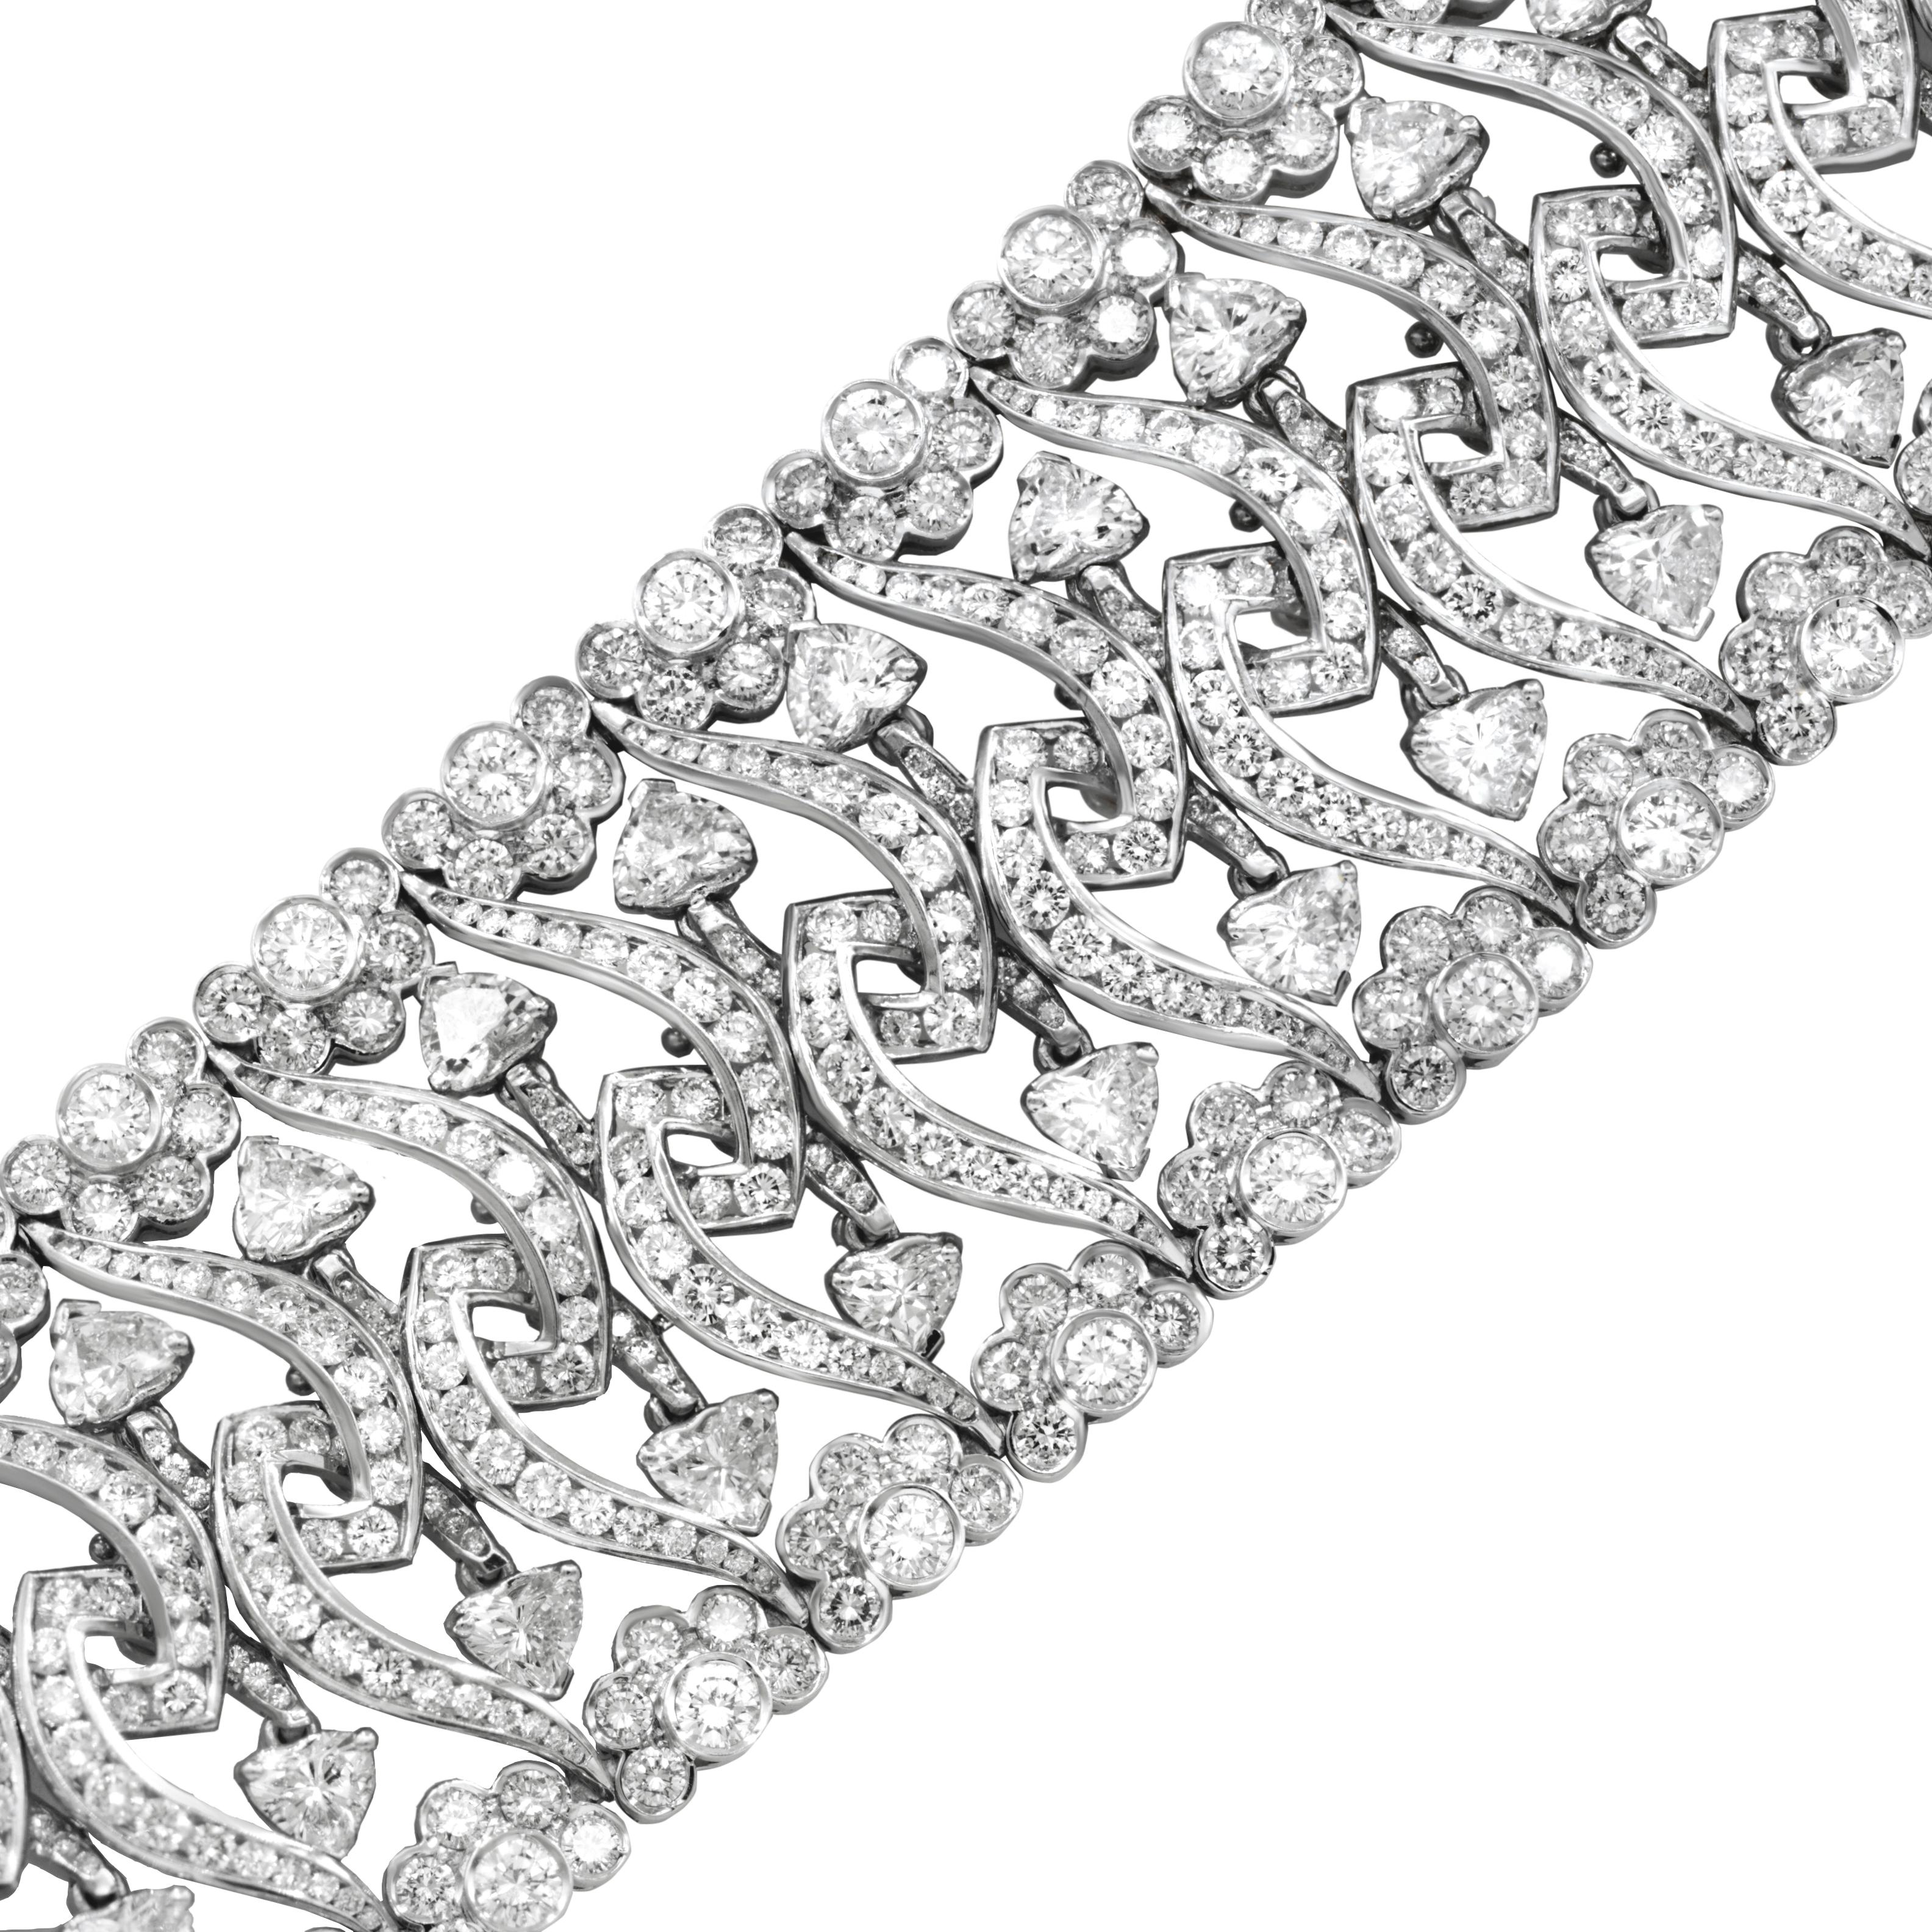 18kt white gold wide, flexible fashion heart bracelet featuring 32.50 carats of diamonds
